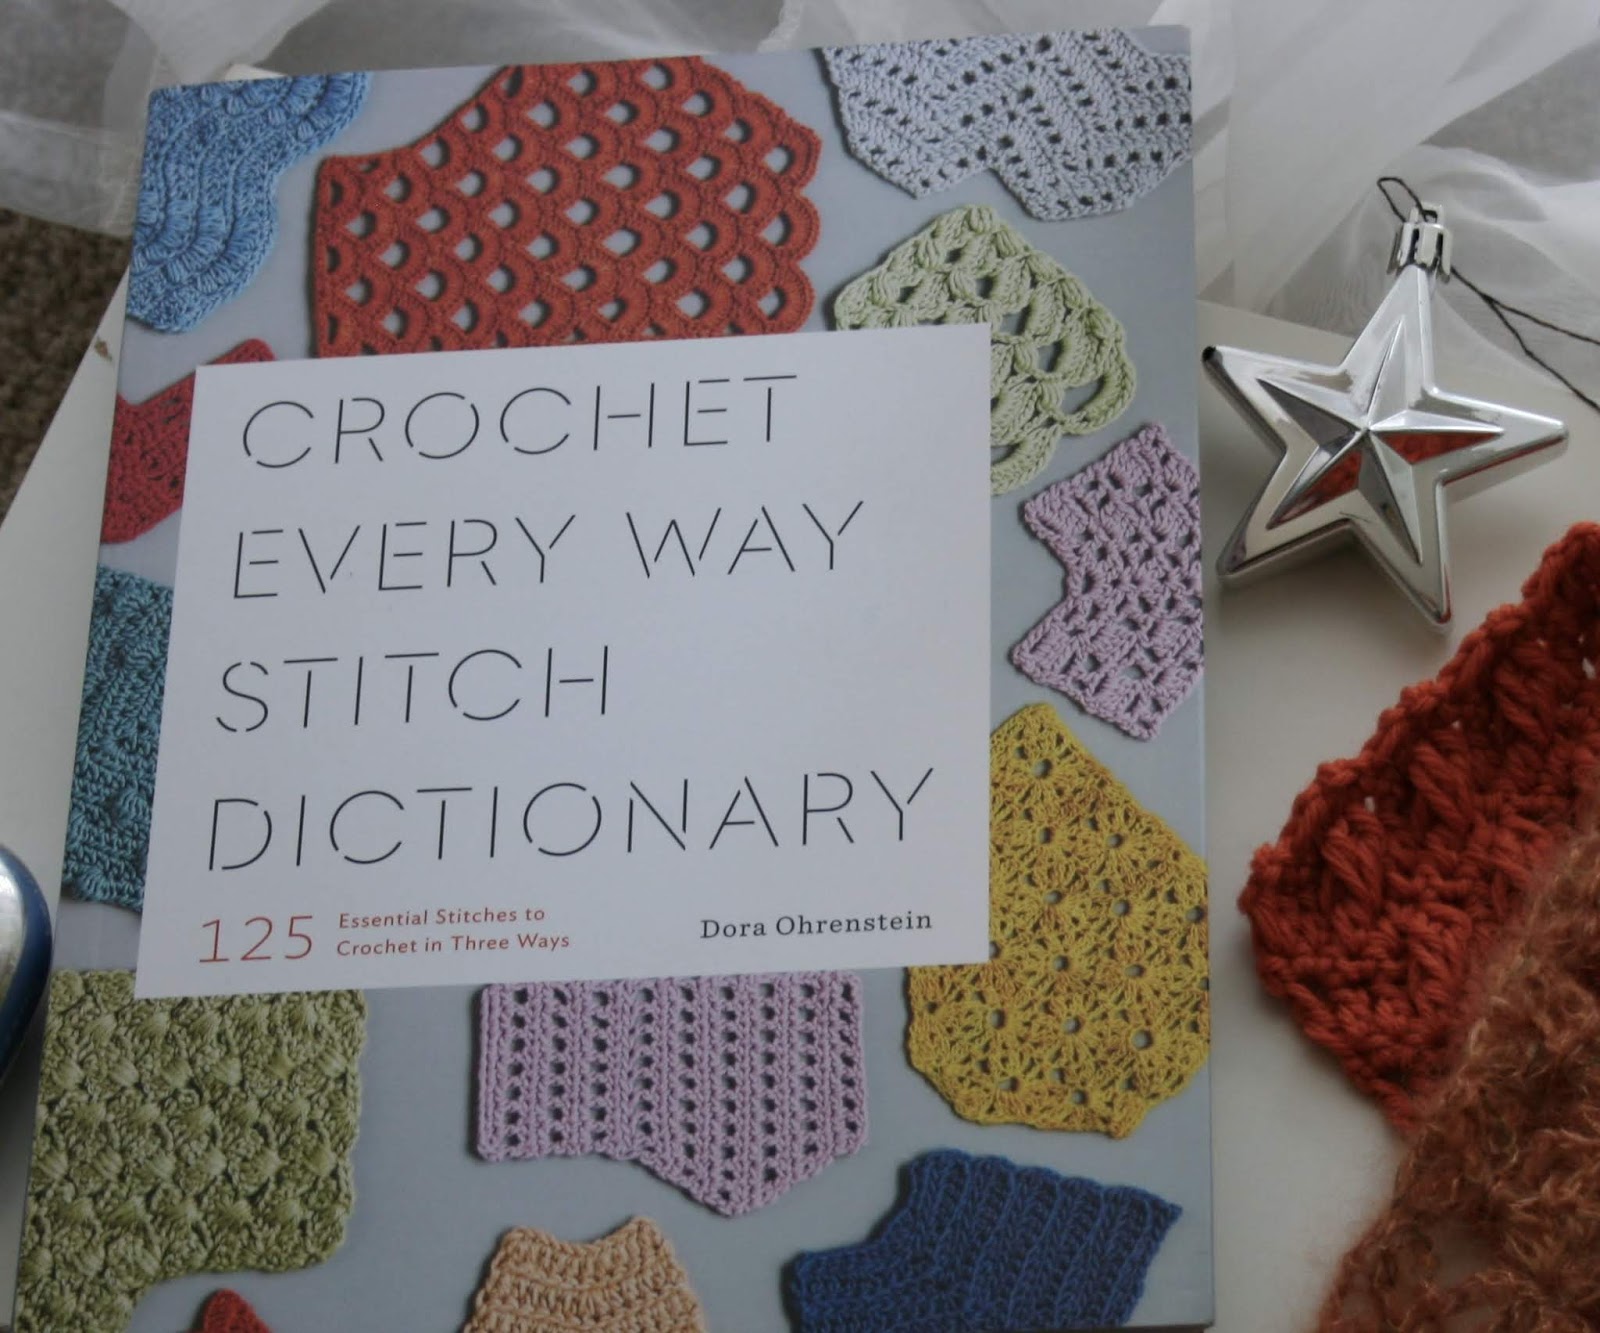 Crochet Every Way Stitch Dictionary by Dora Ohrenstein, Paperback